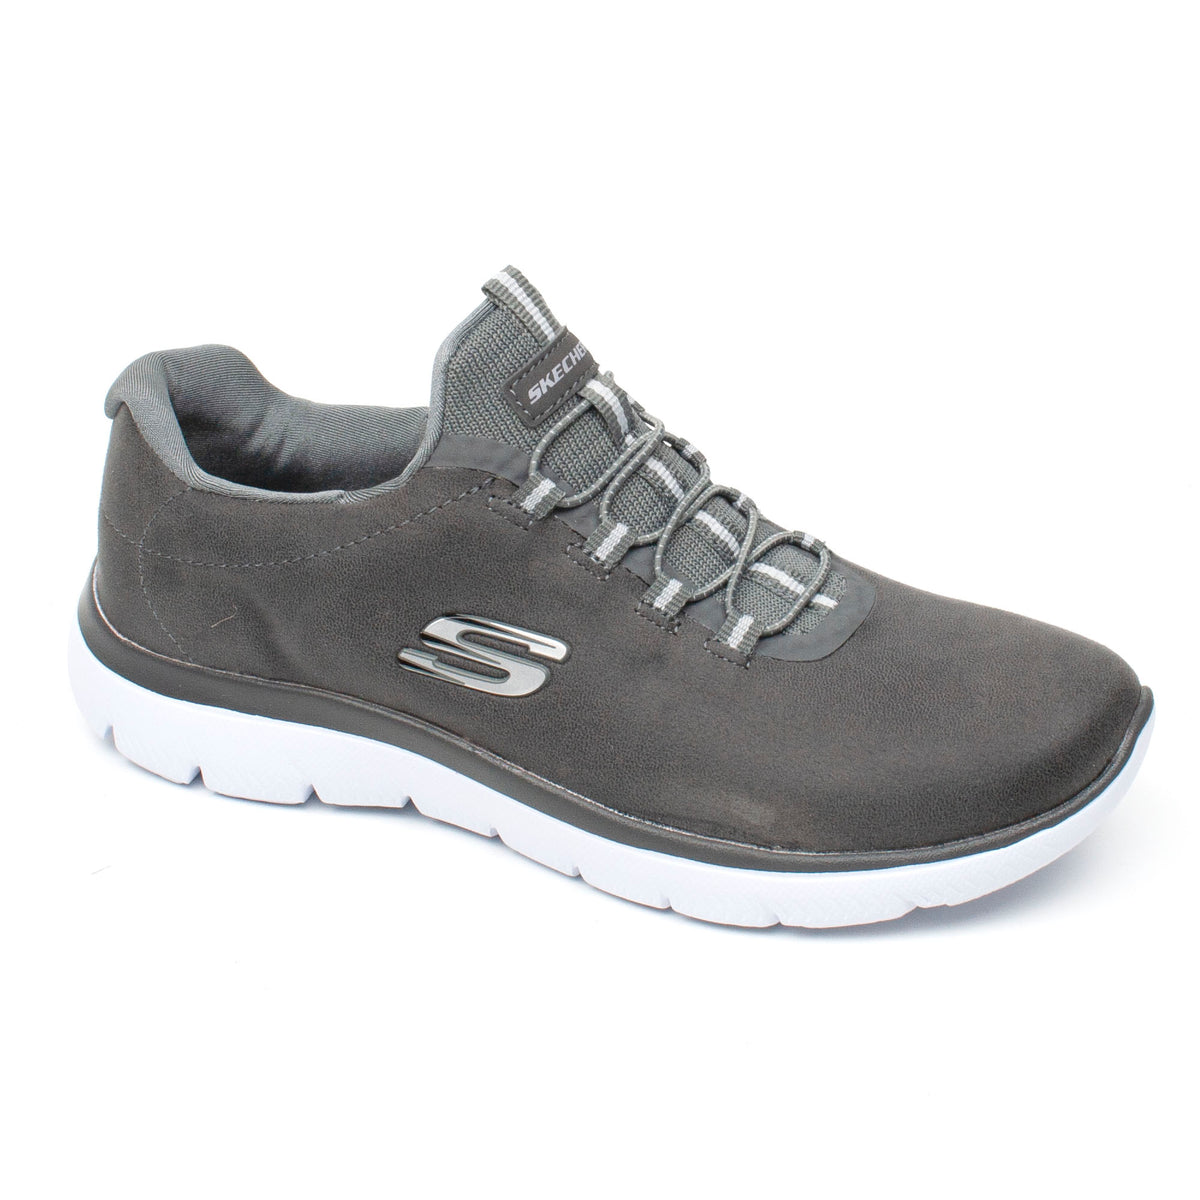 Skechers pantofi dama sport gri ID2185-GRI